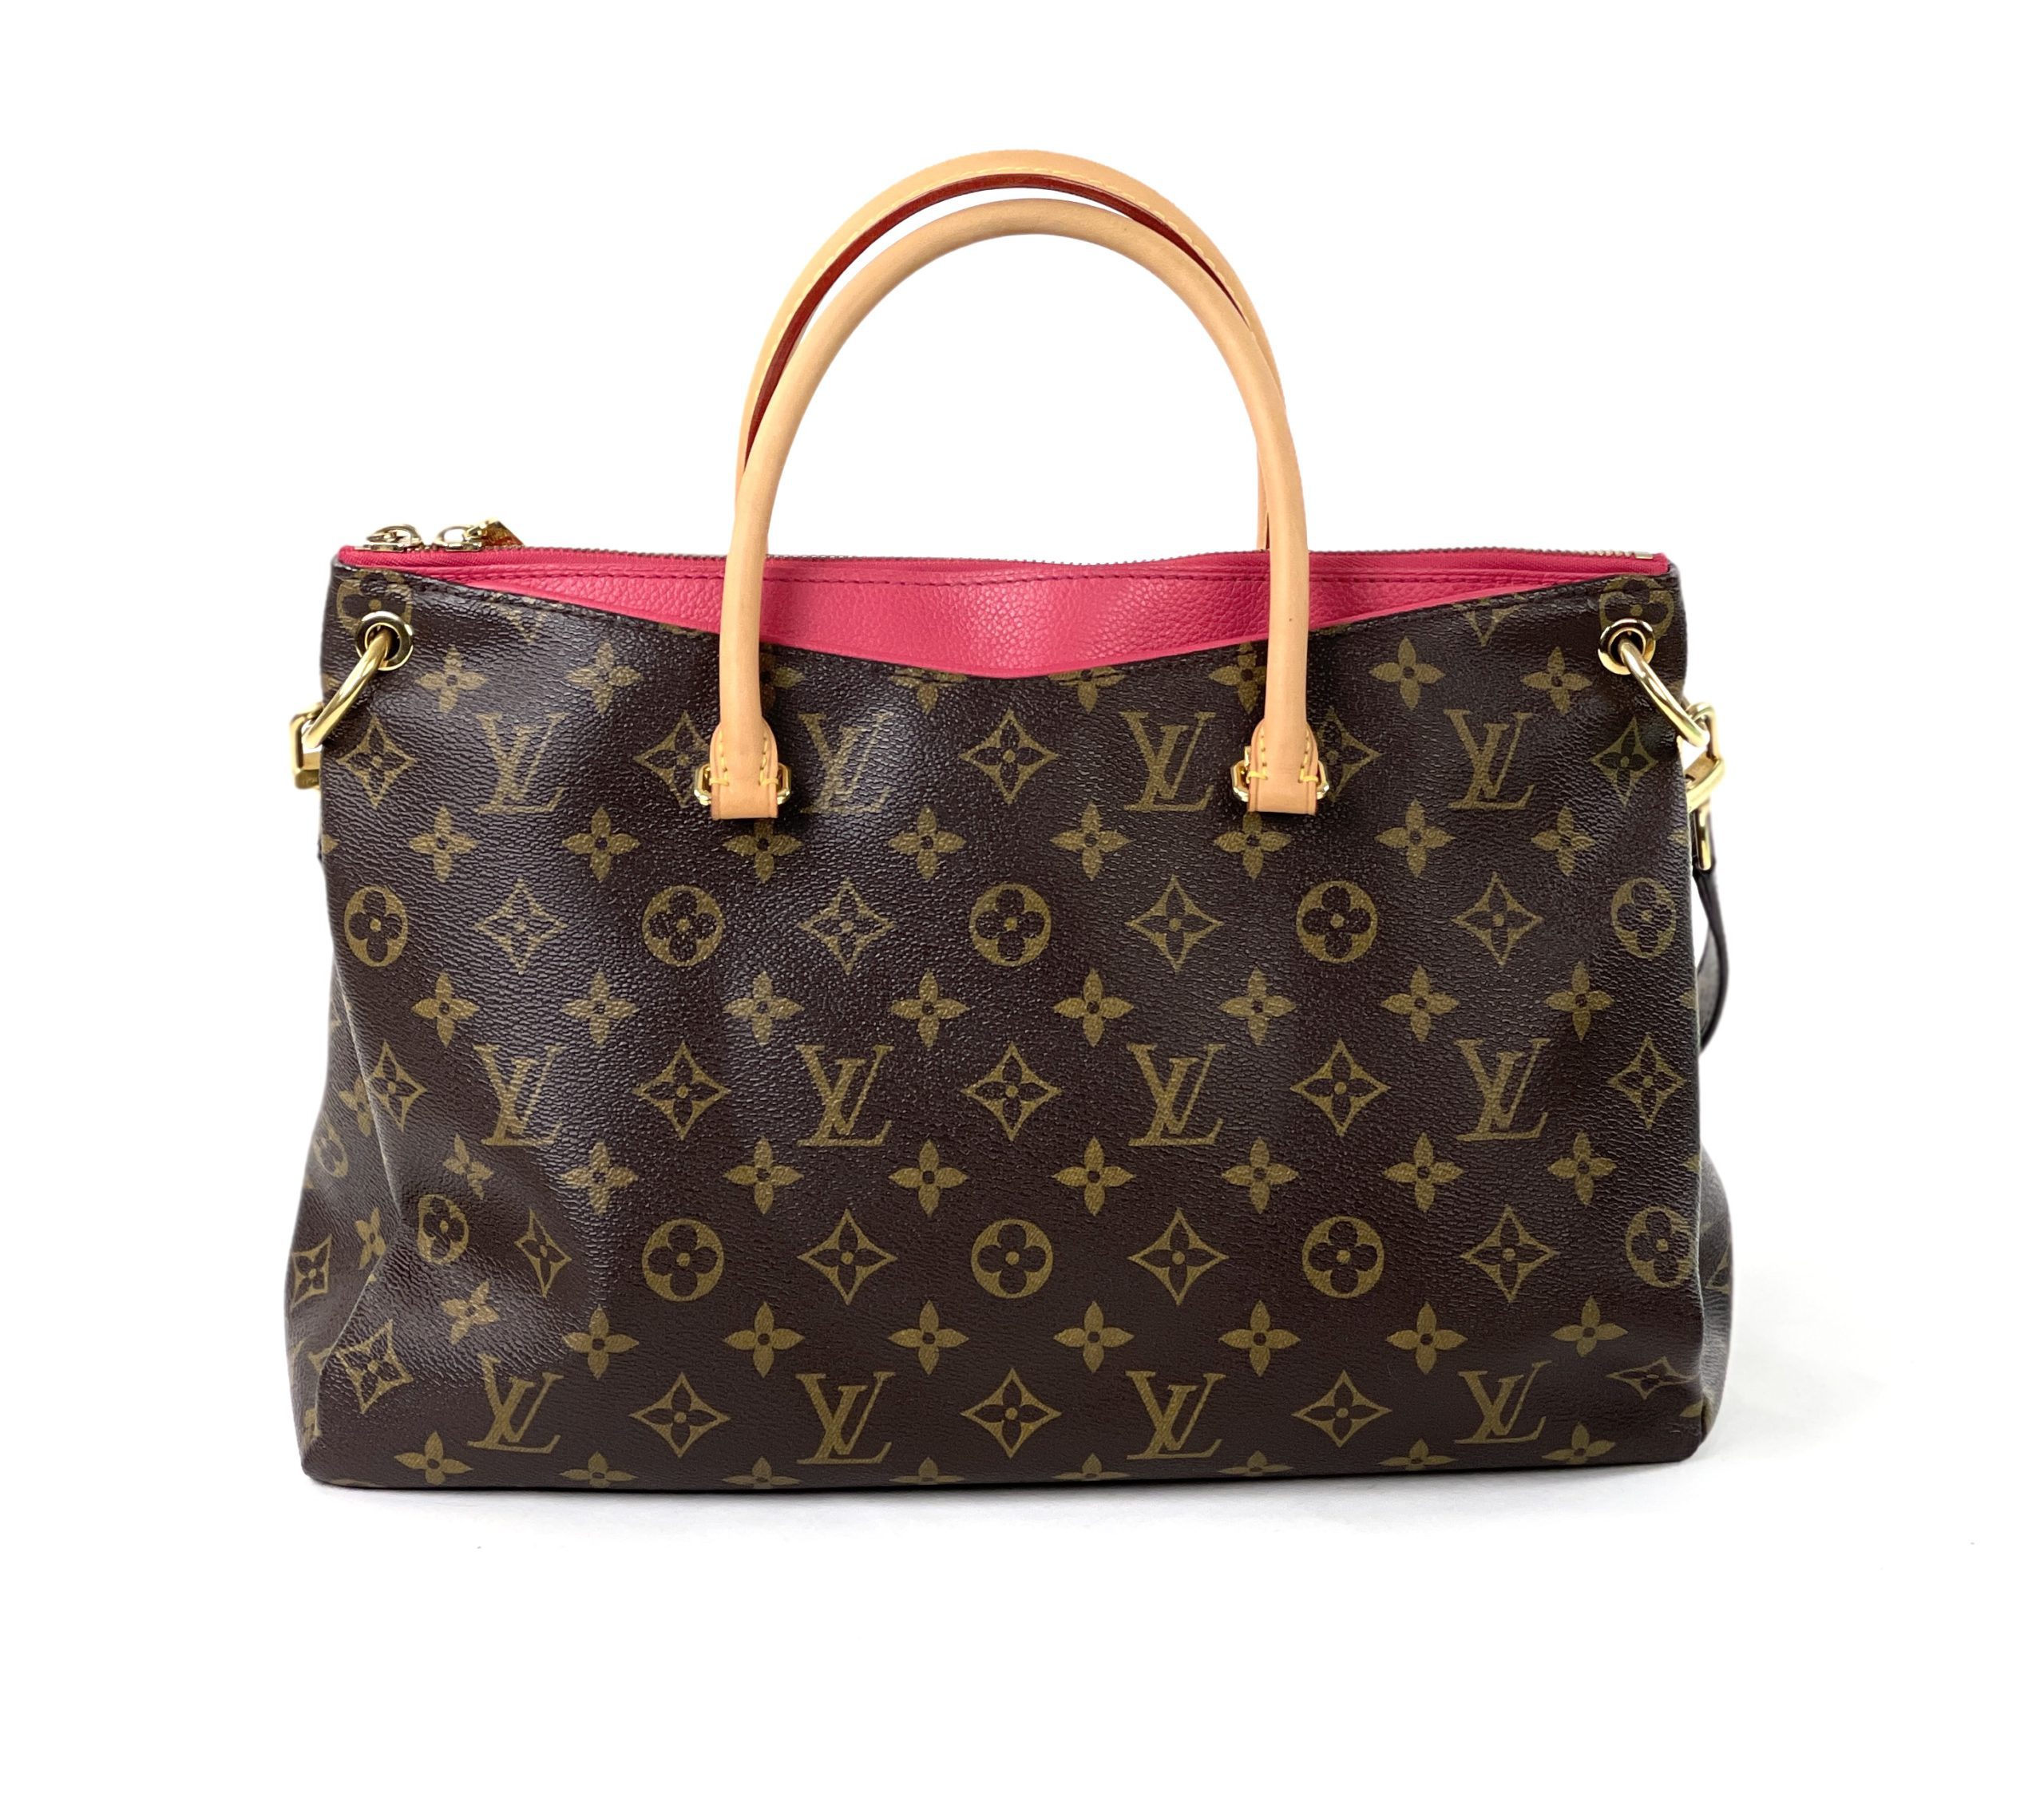 Say hello to Louis Vuitton's new Pallas monogram handbag